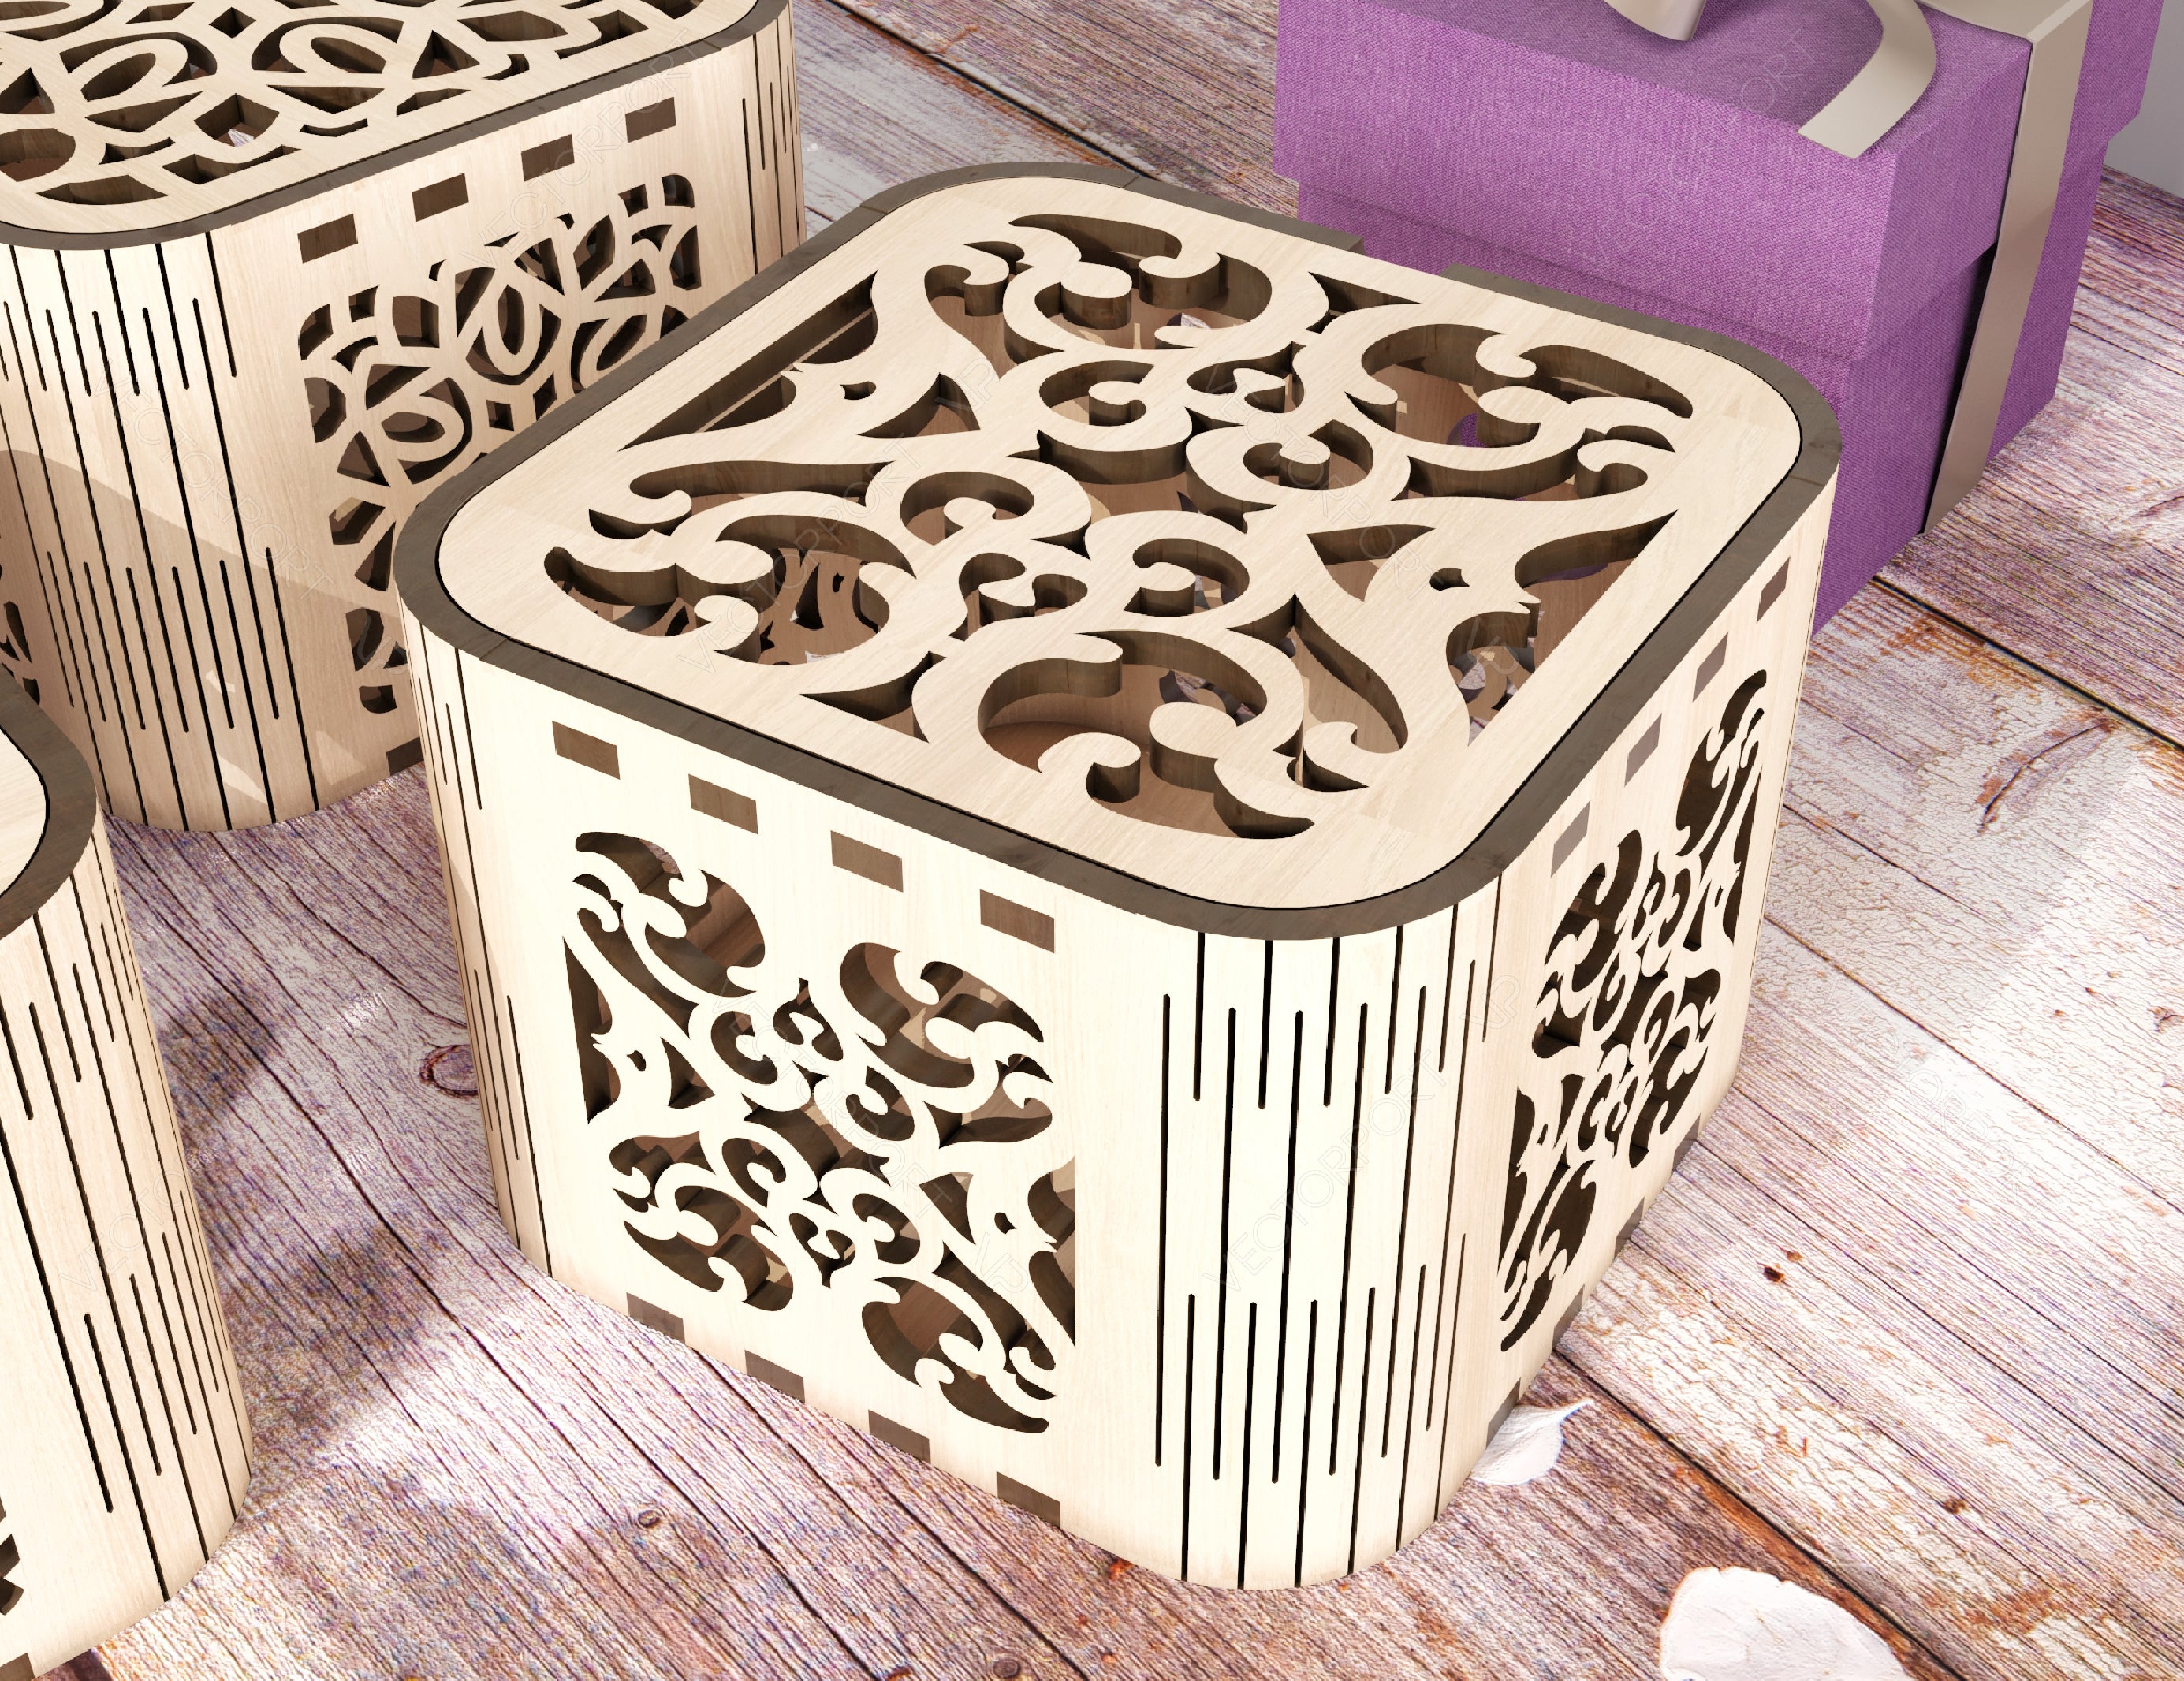 Floral Design Decorative Wooden Gift box laser cut jeweler case Wedding Love vector model Glowforge cut file |#U140|